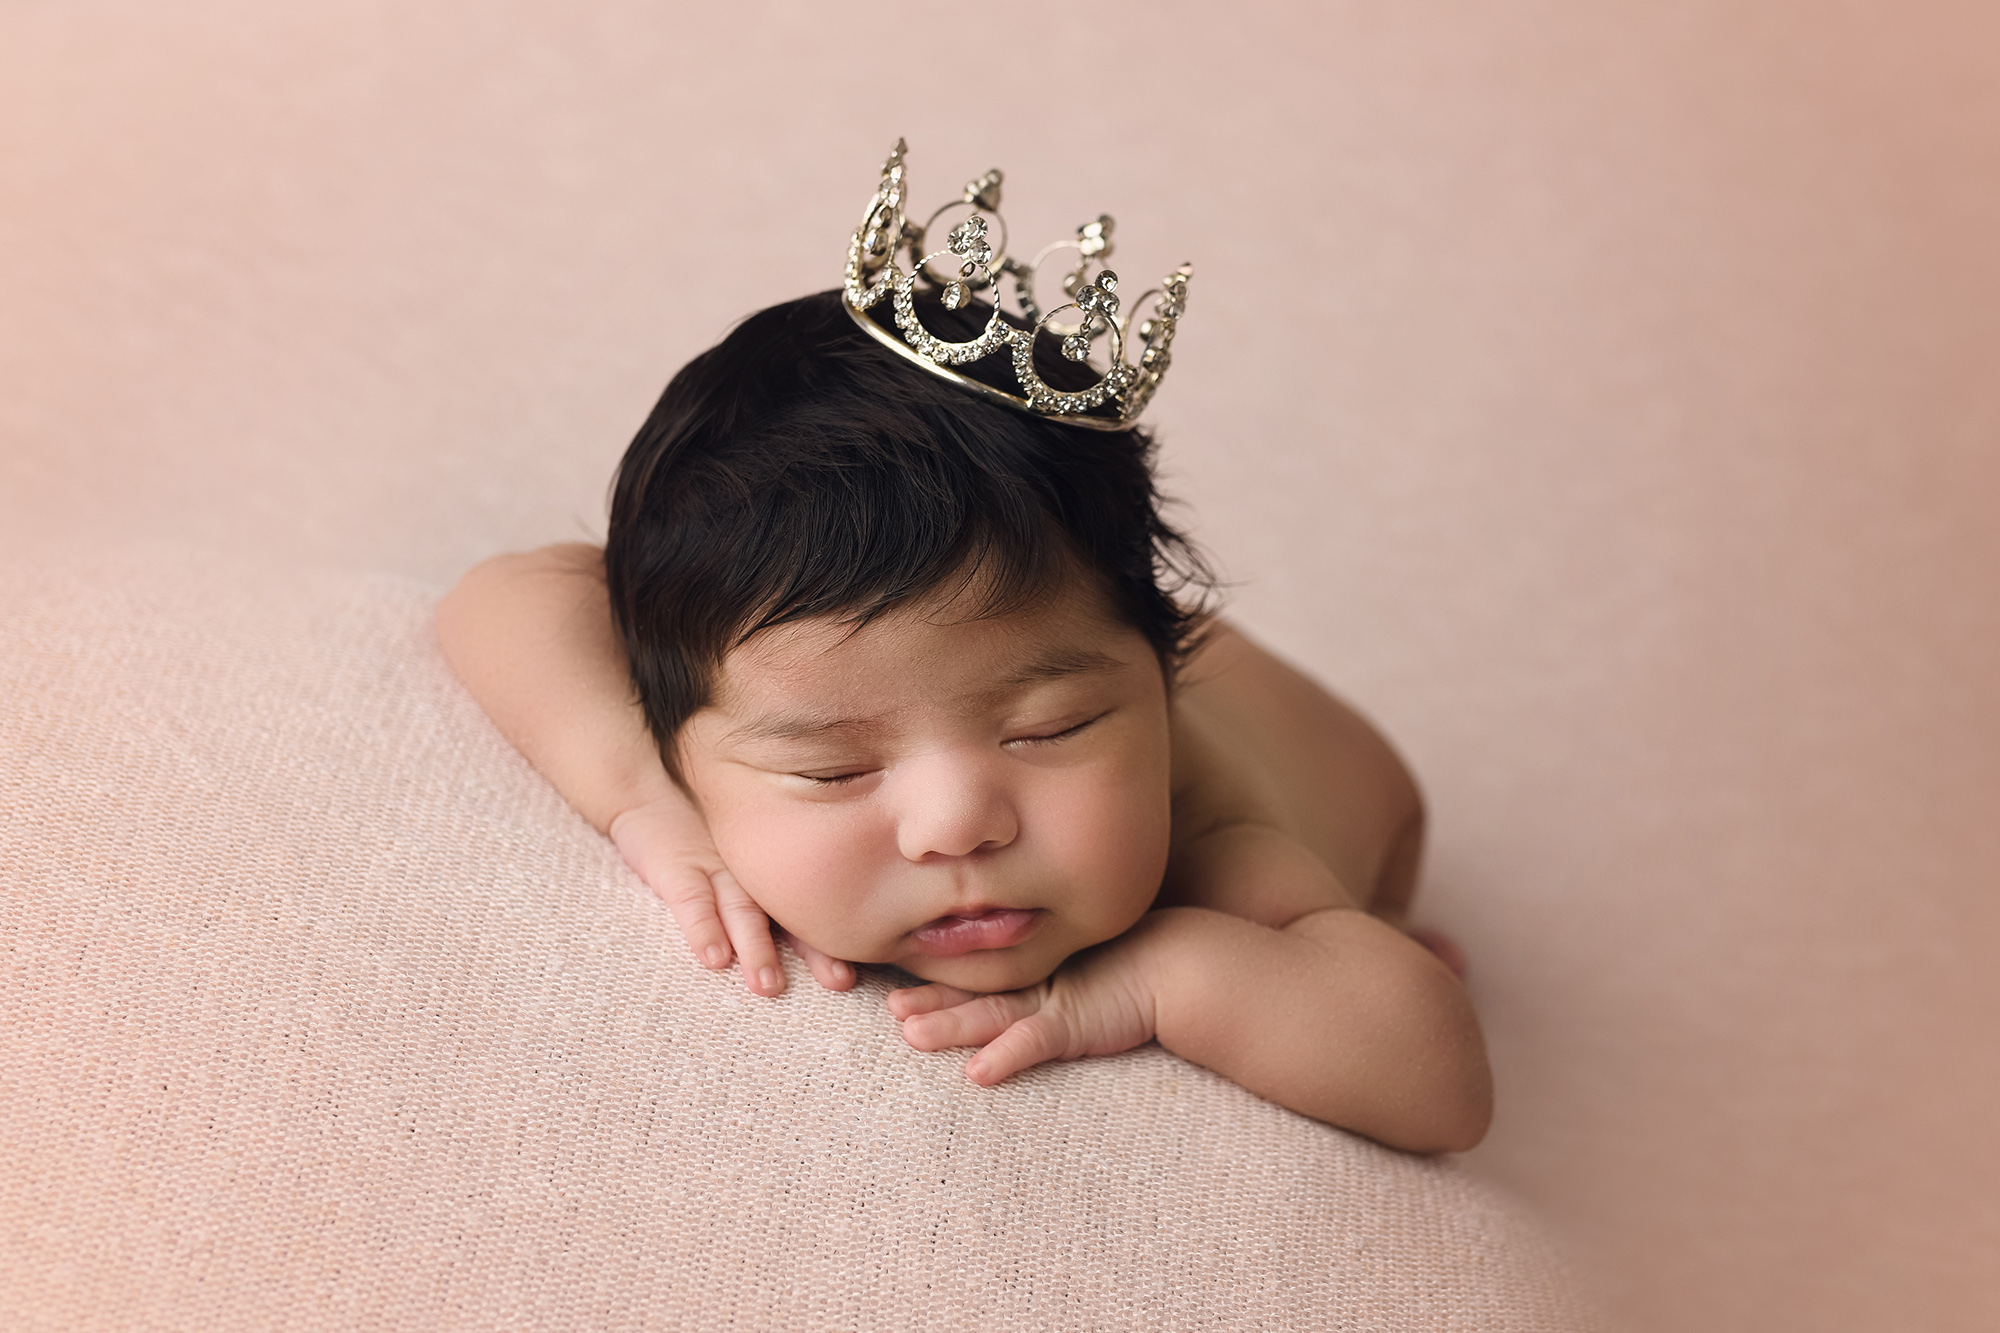 newborn baby girl wearing crown